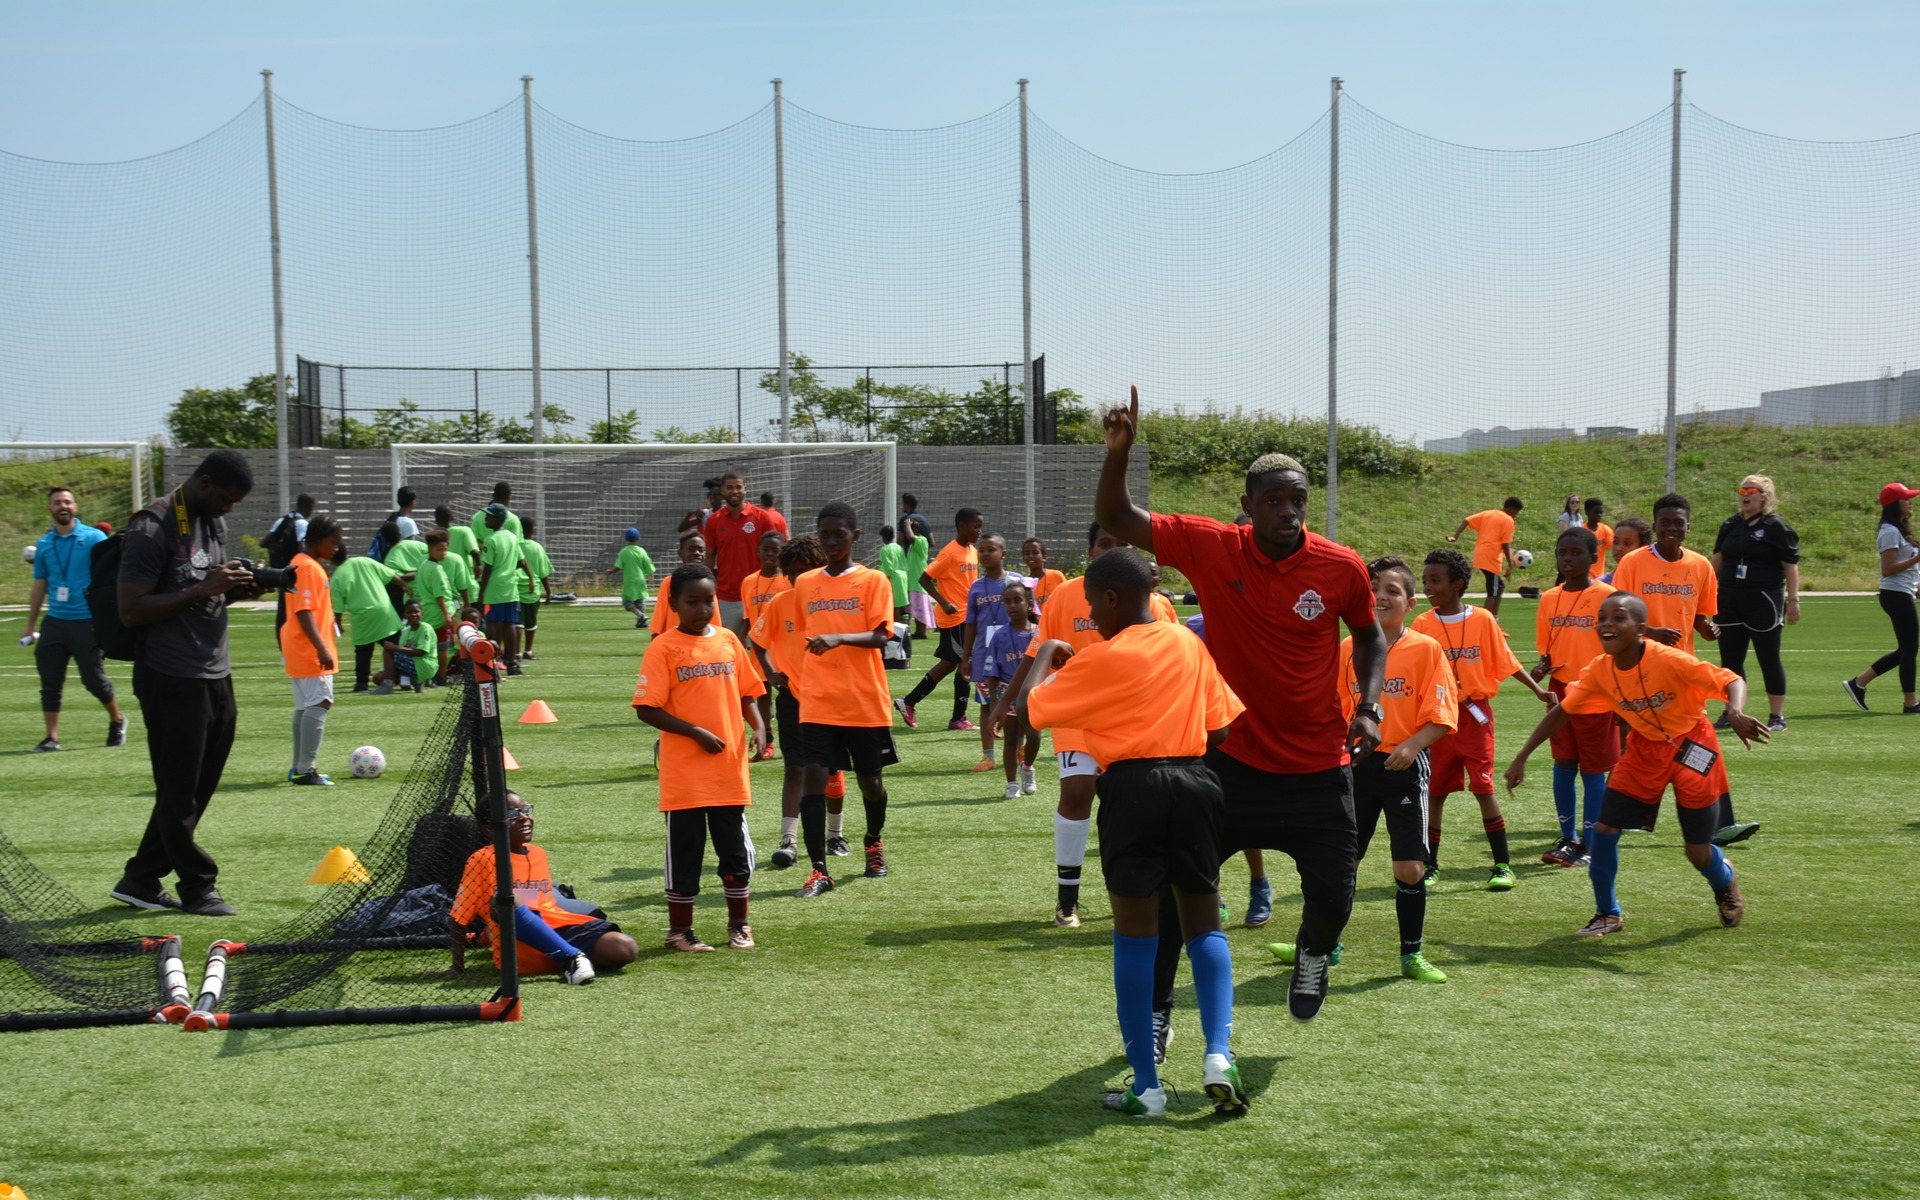 <p>Kia and Toronto FC team up to help community children</p>